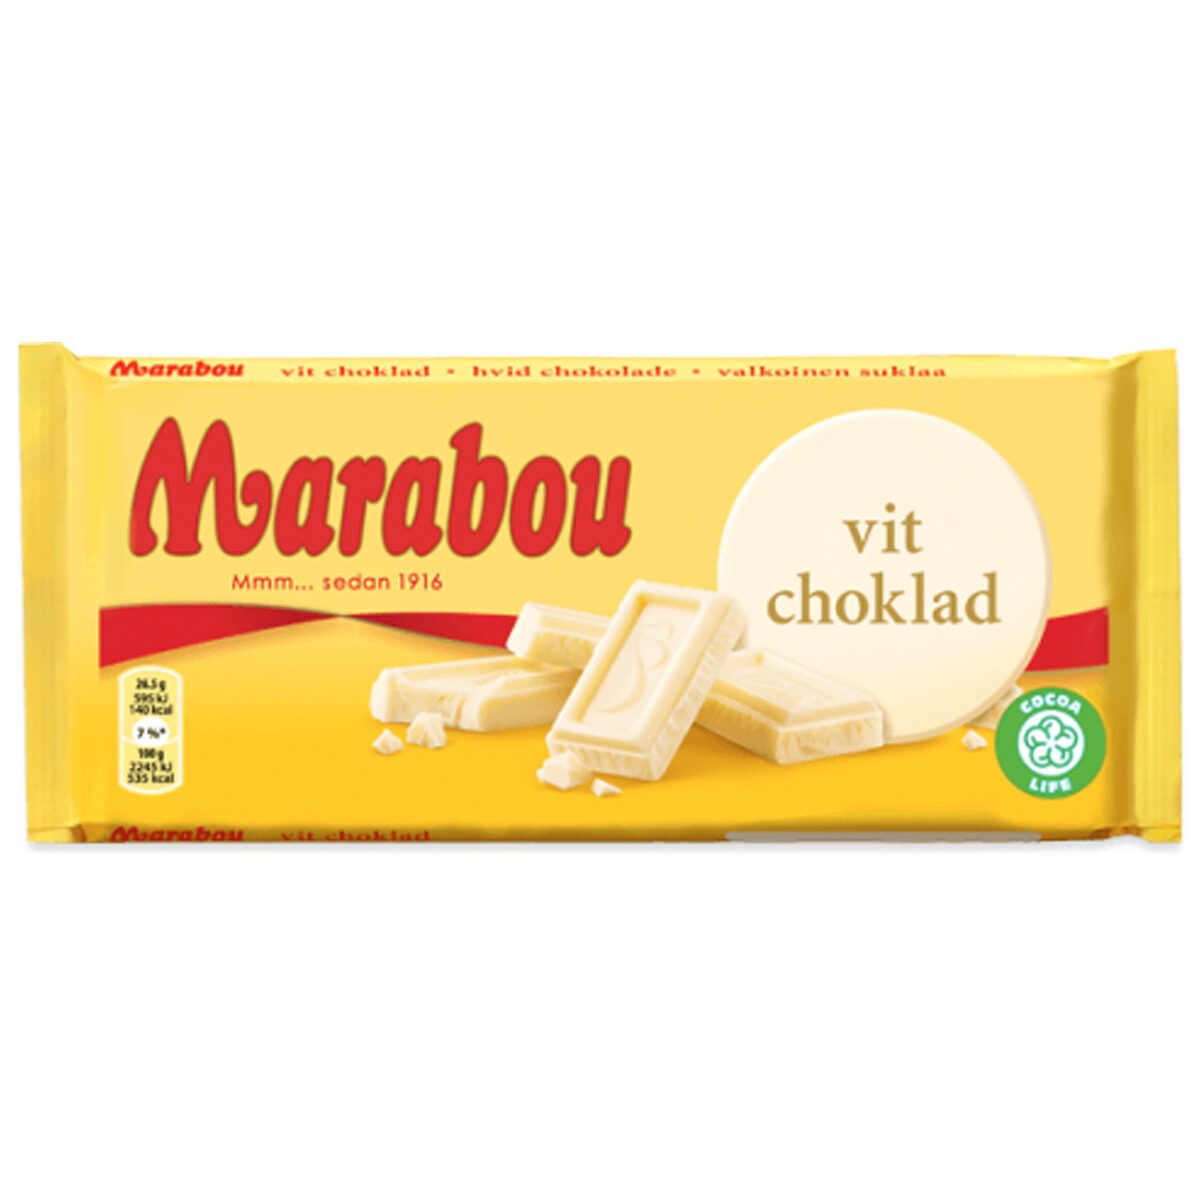 Marabou vit choklad - weiße Schokolade (180g) 1